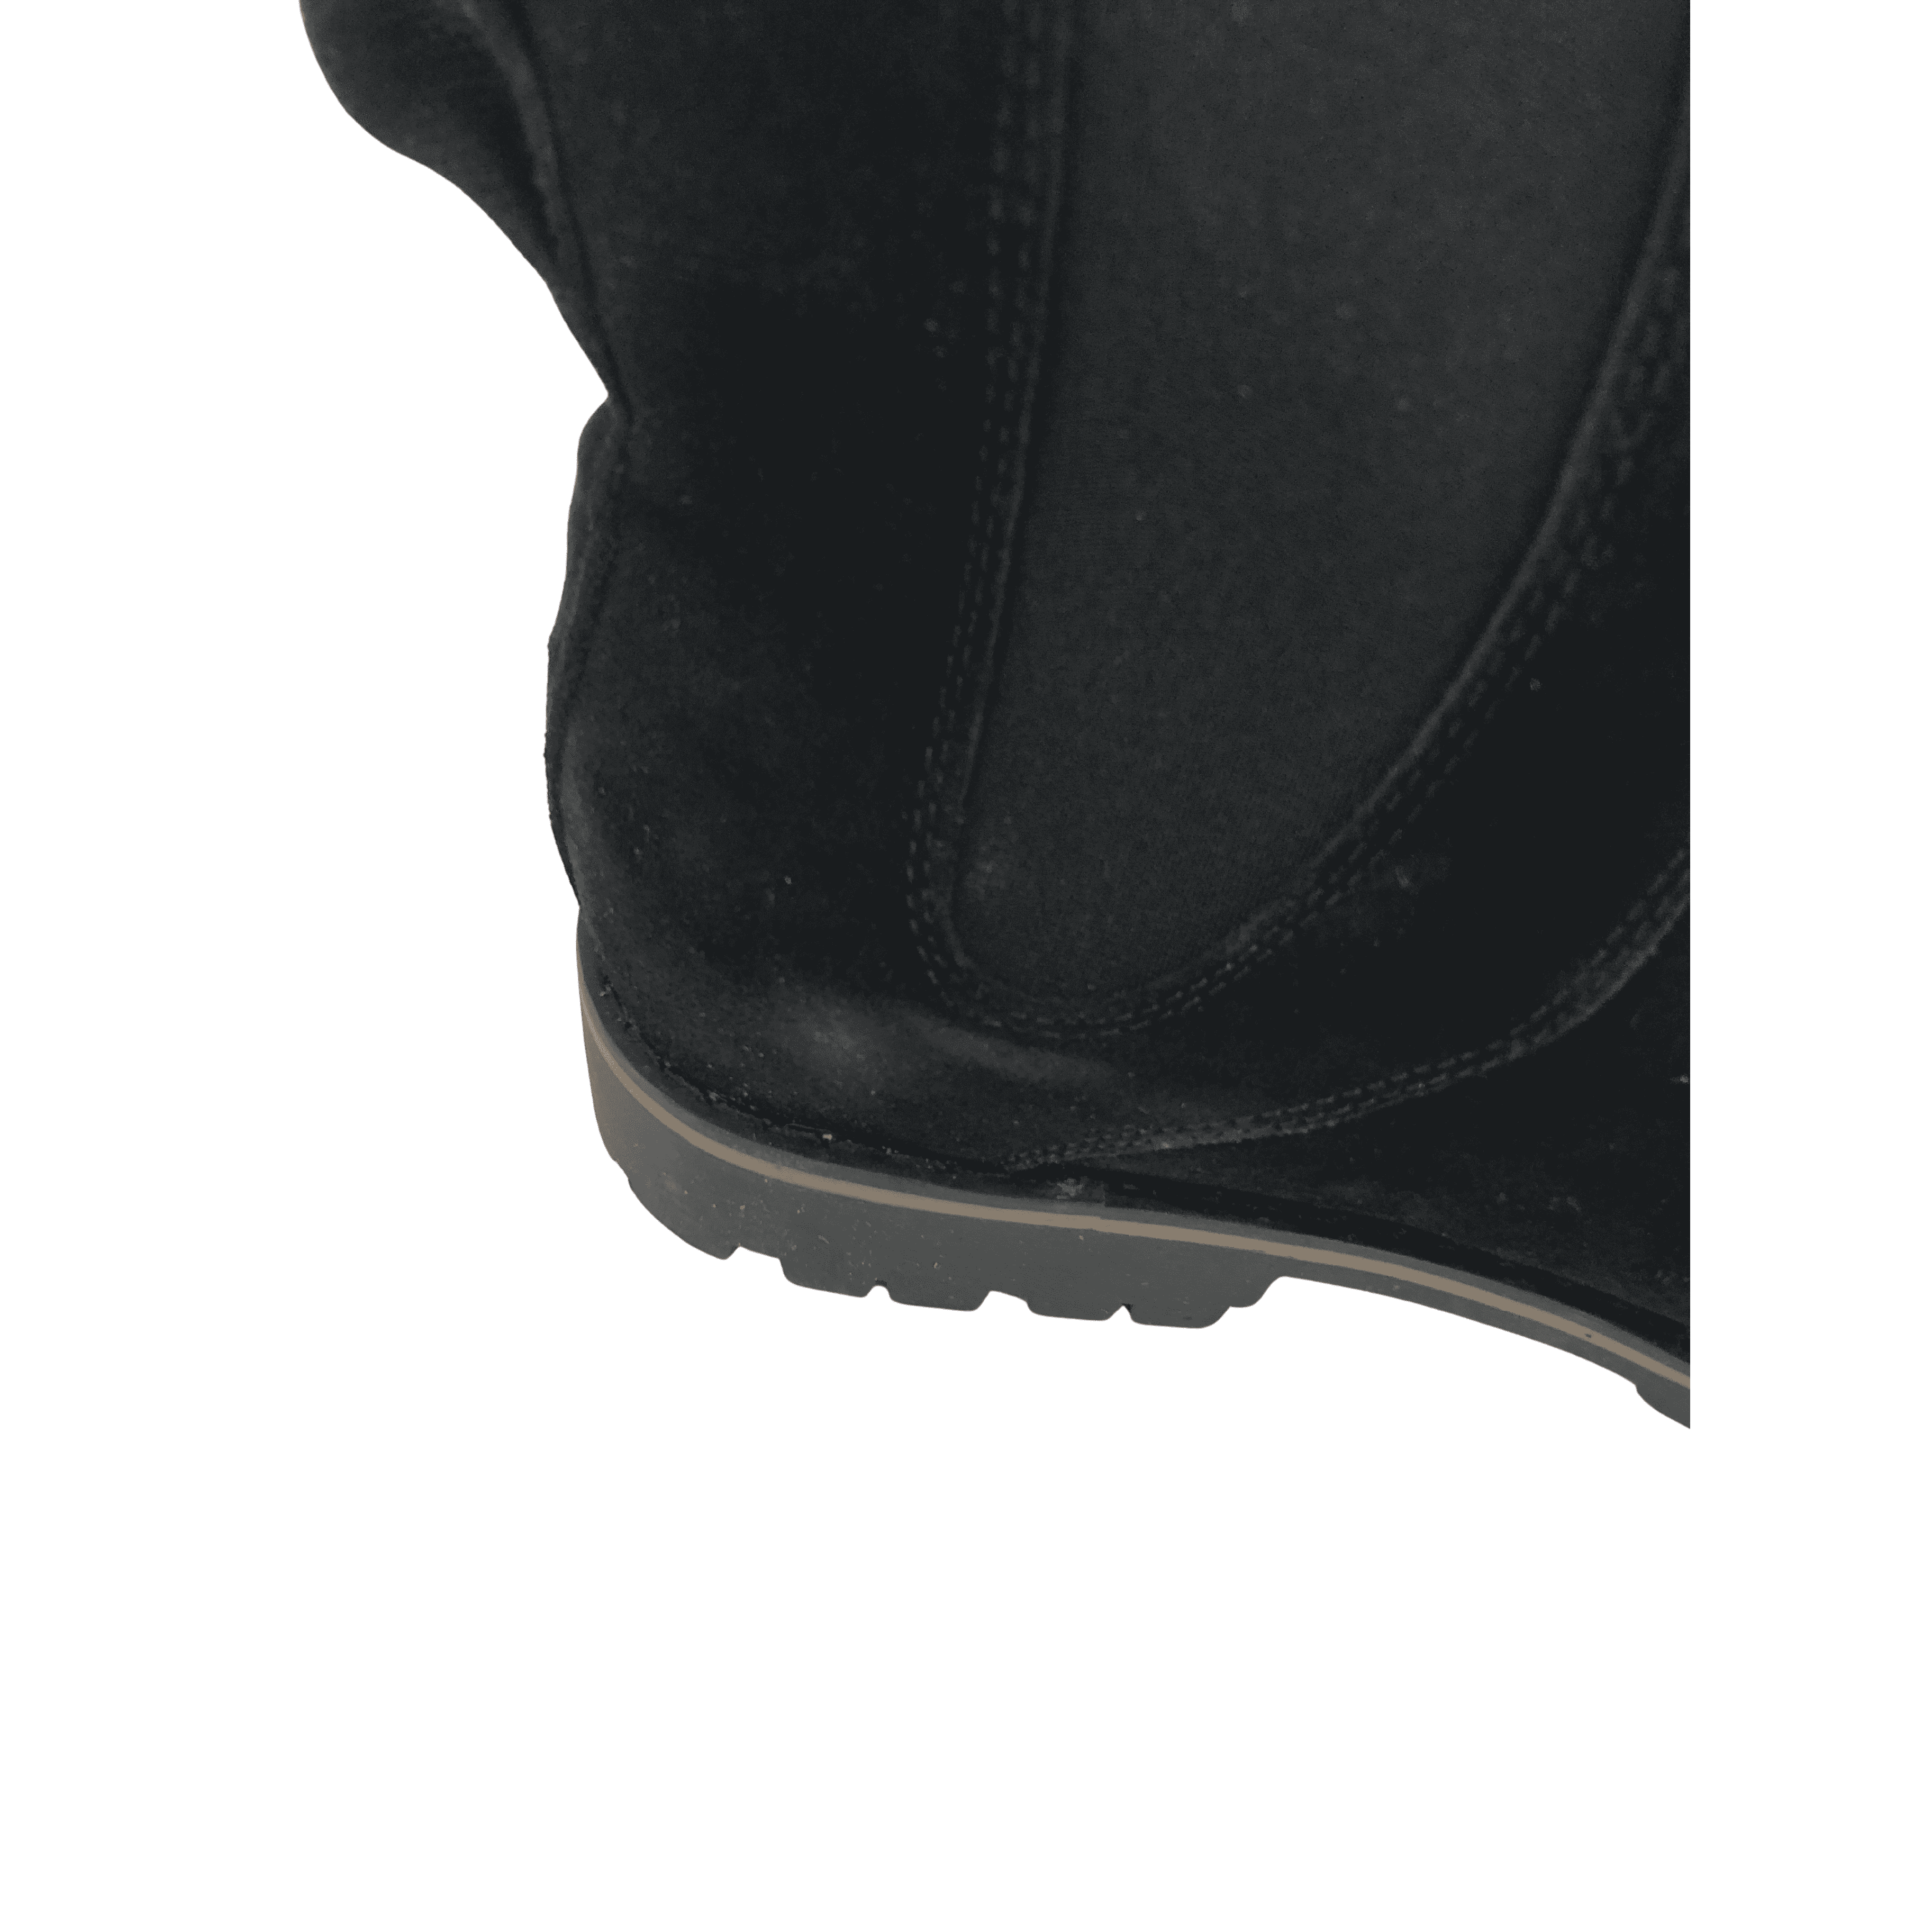 Bearpaw Men's Chelsea Boot / Leather Upper / Double Gore / NeverWet Technology / Black / Size 13